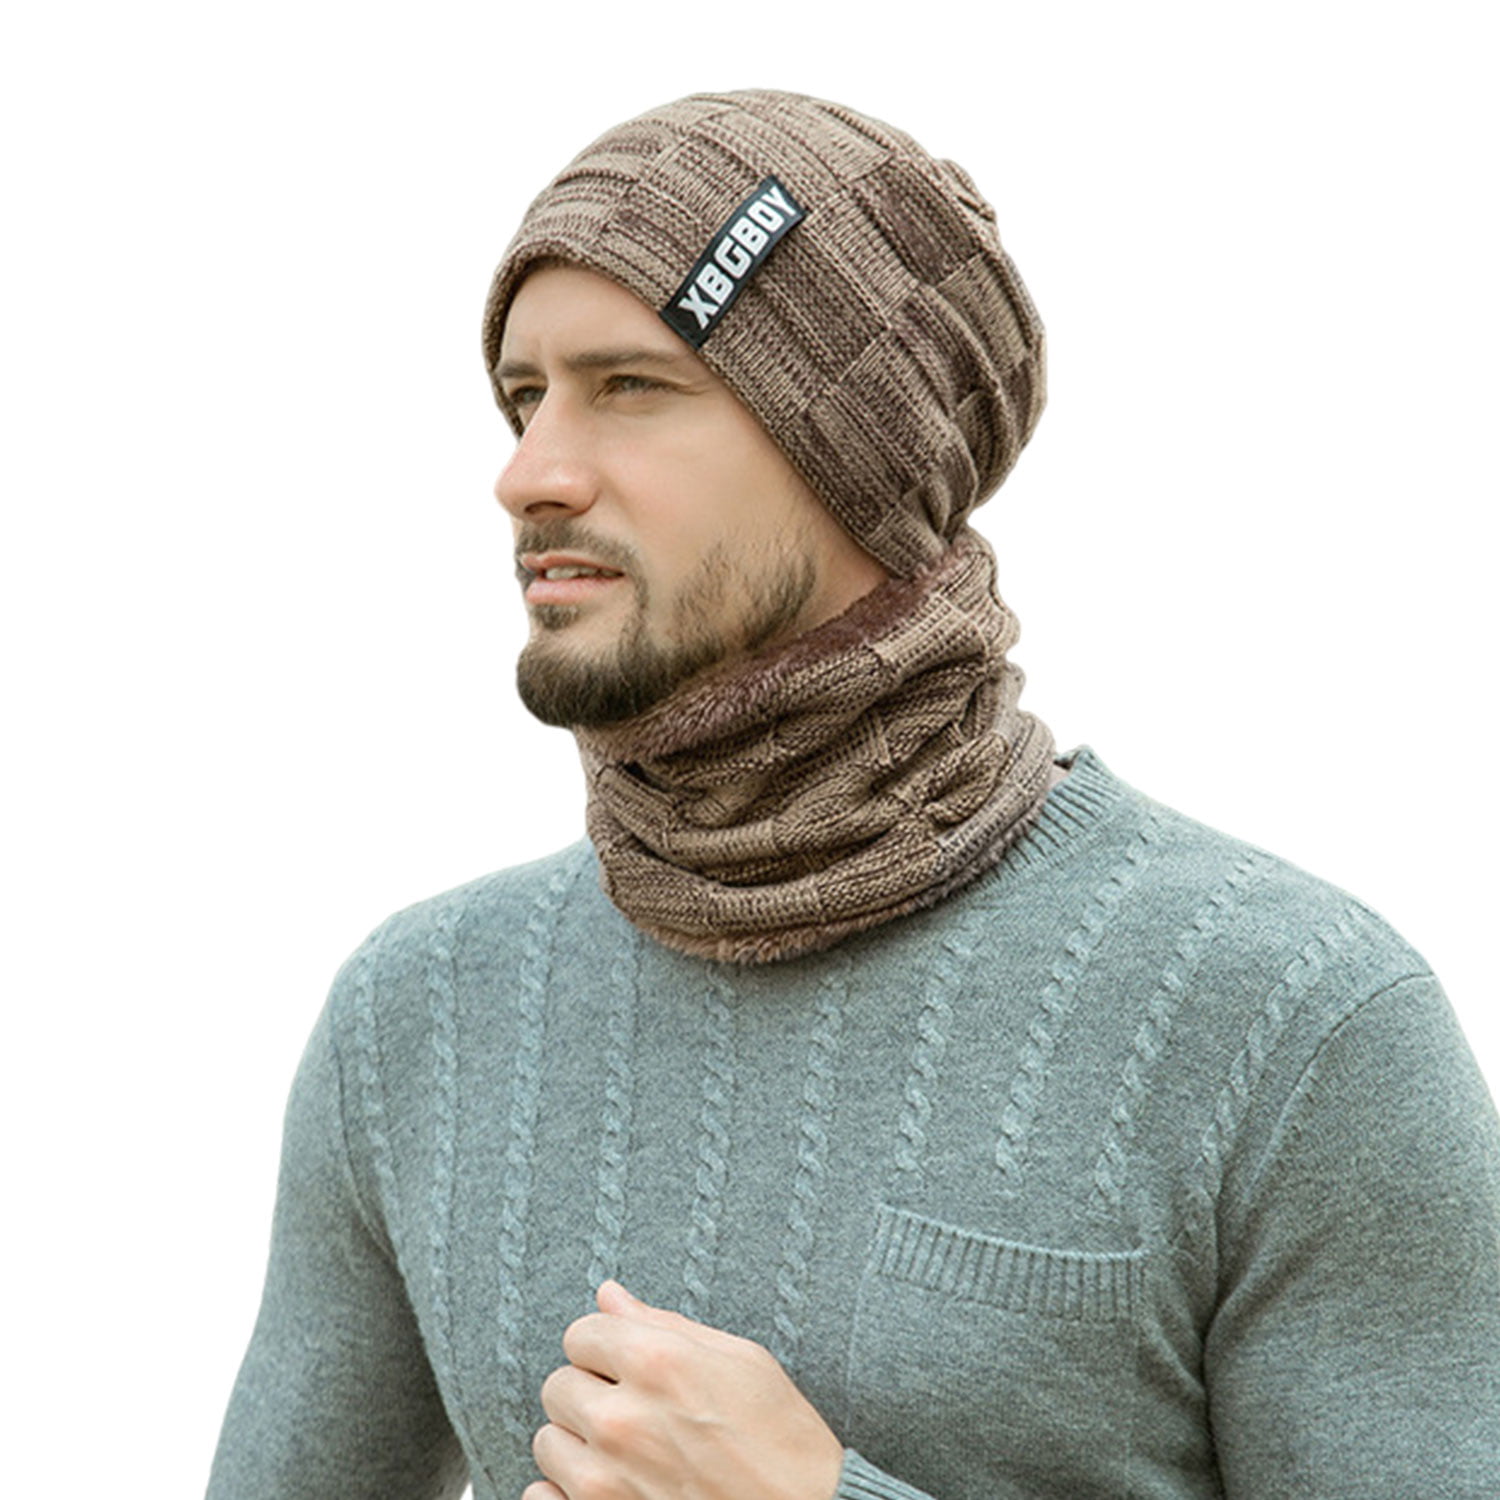 5.0 Bluetooth Headphone Wireless Hands Free Hat Soft Warm Knit Cap Winter Set for Men Women Bluetooth Beanie with Scarf Touchscreen Gloves Socks Set Black,1 Set 